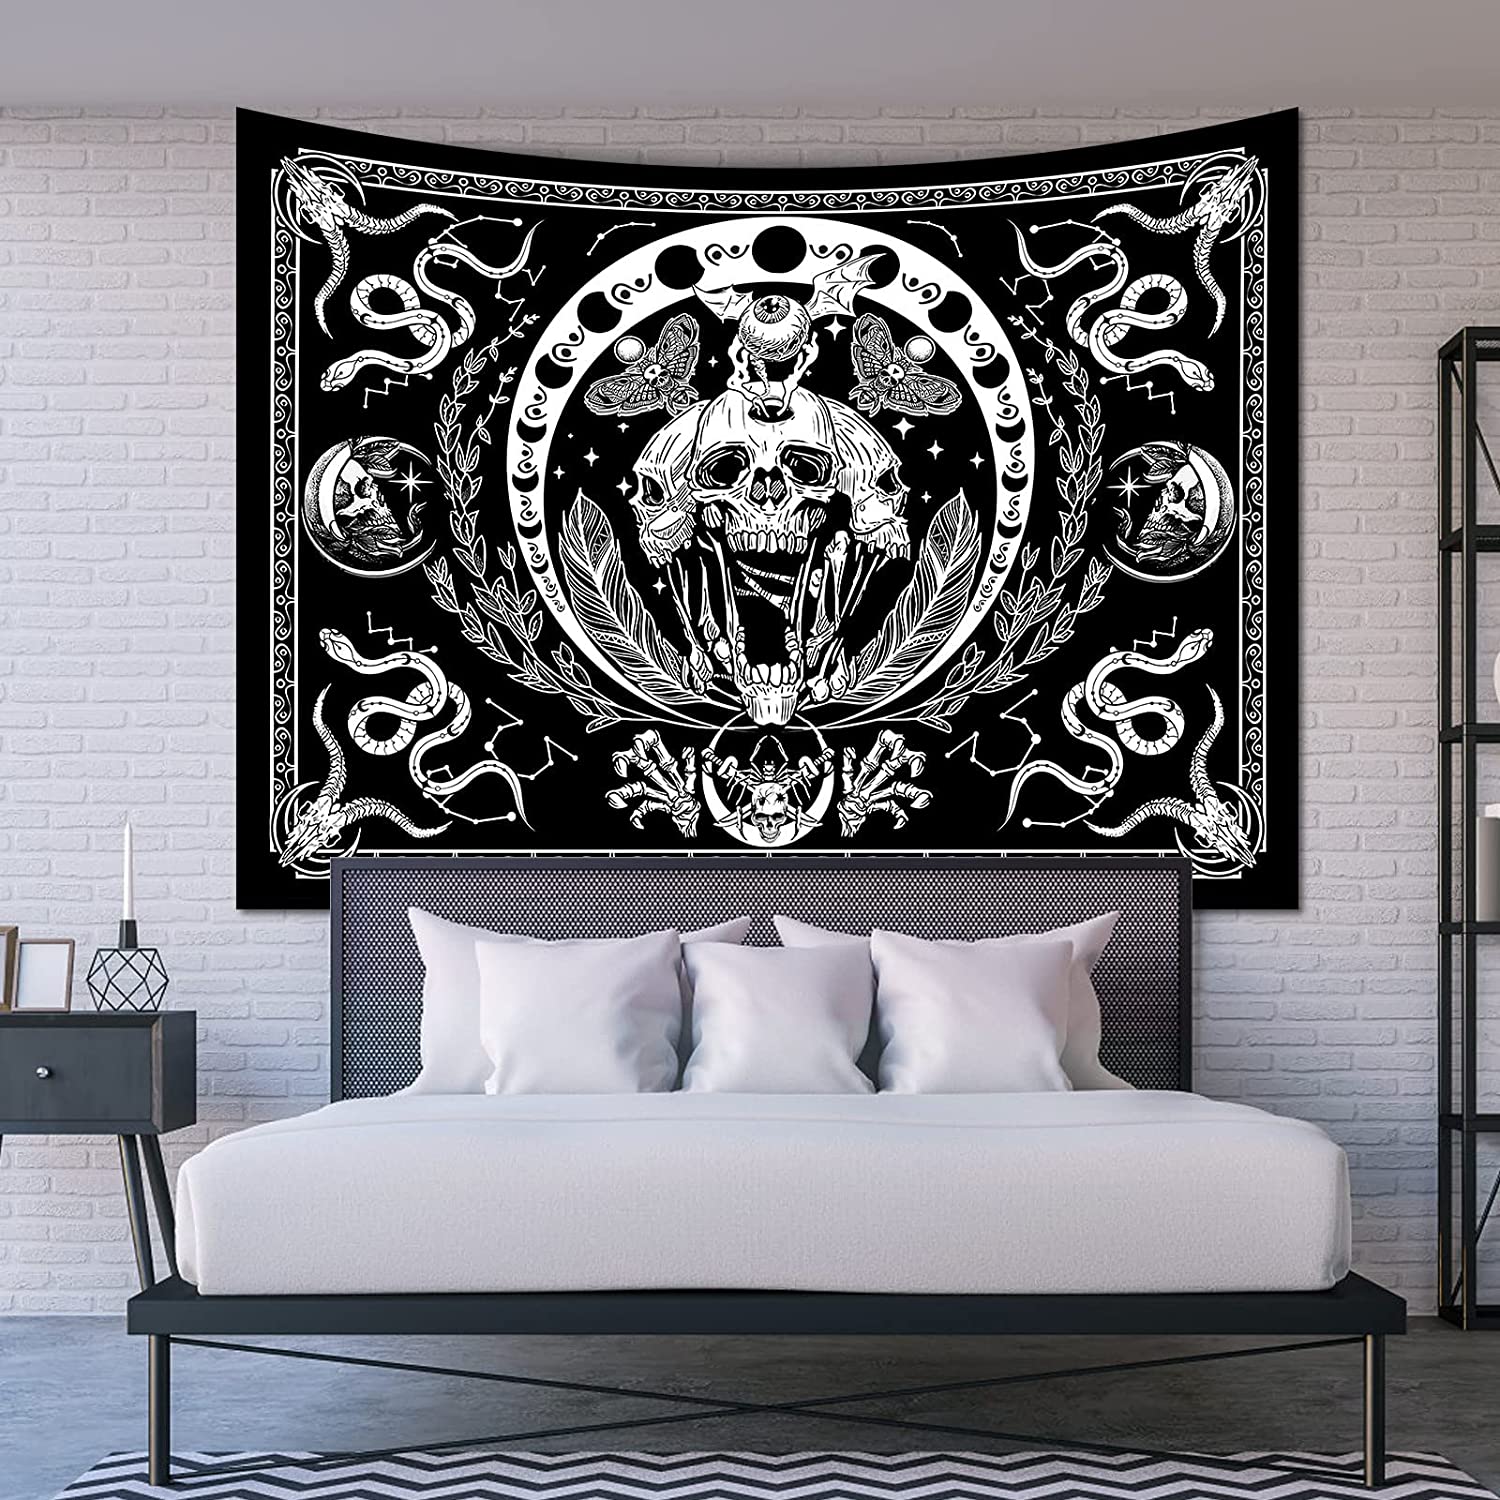 Aesthetic Skull Tapestry For Bedroom - Black And White Trippy Goth ...